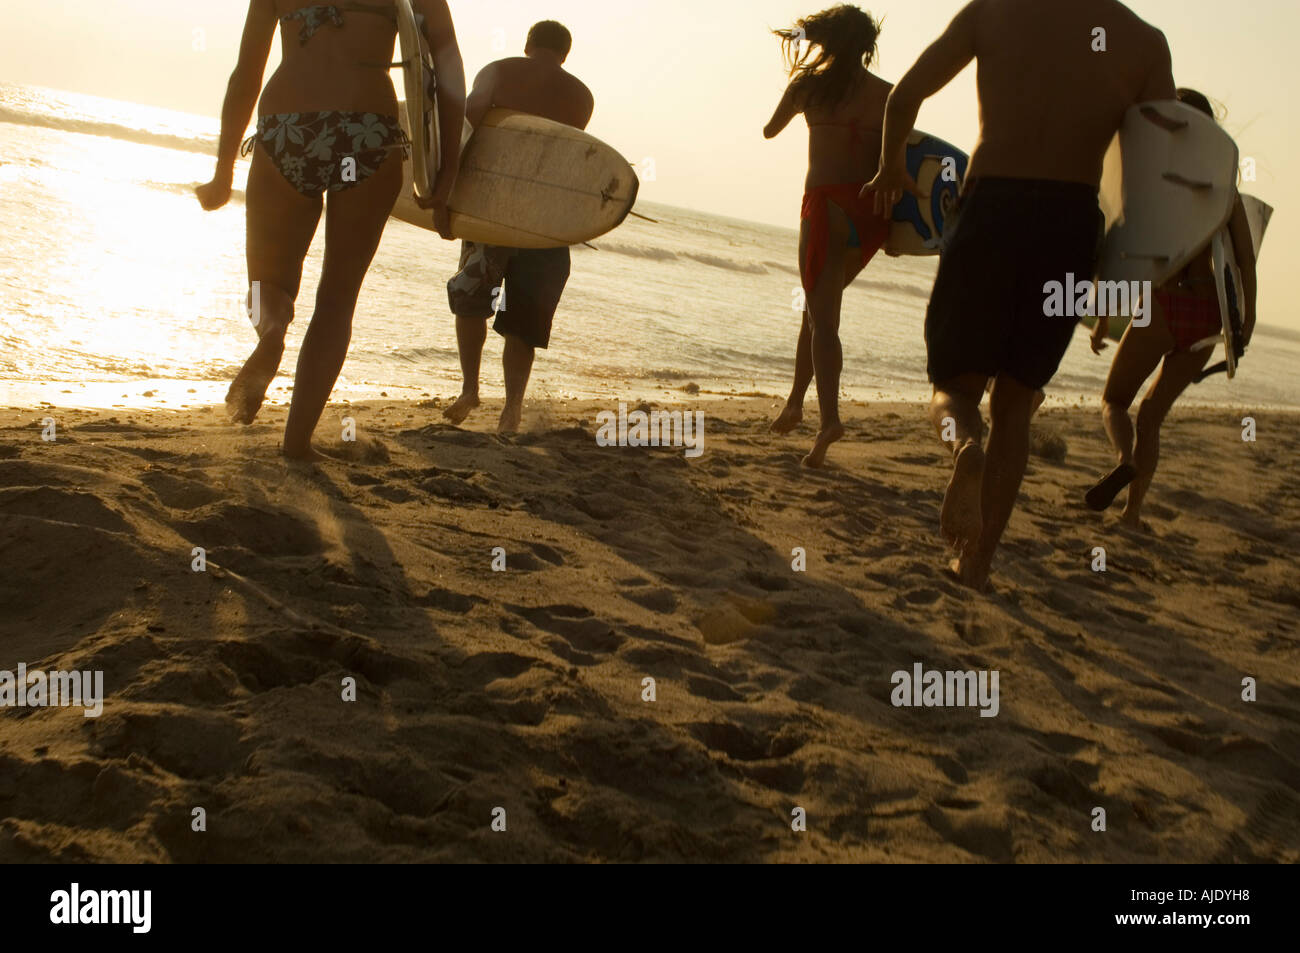 Fünf Surfer tragen Surfbretter am Strand bei Sonnenuntergang, Back view Stockfoto